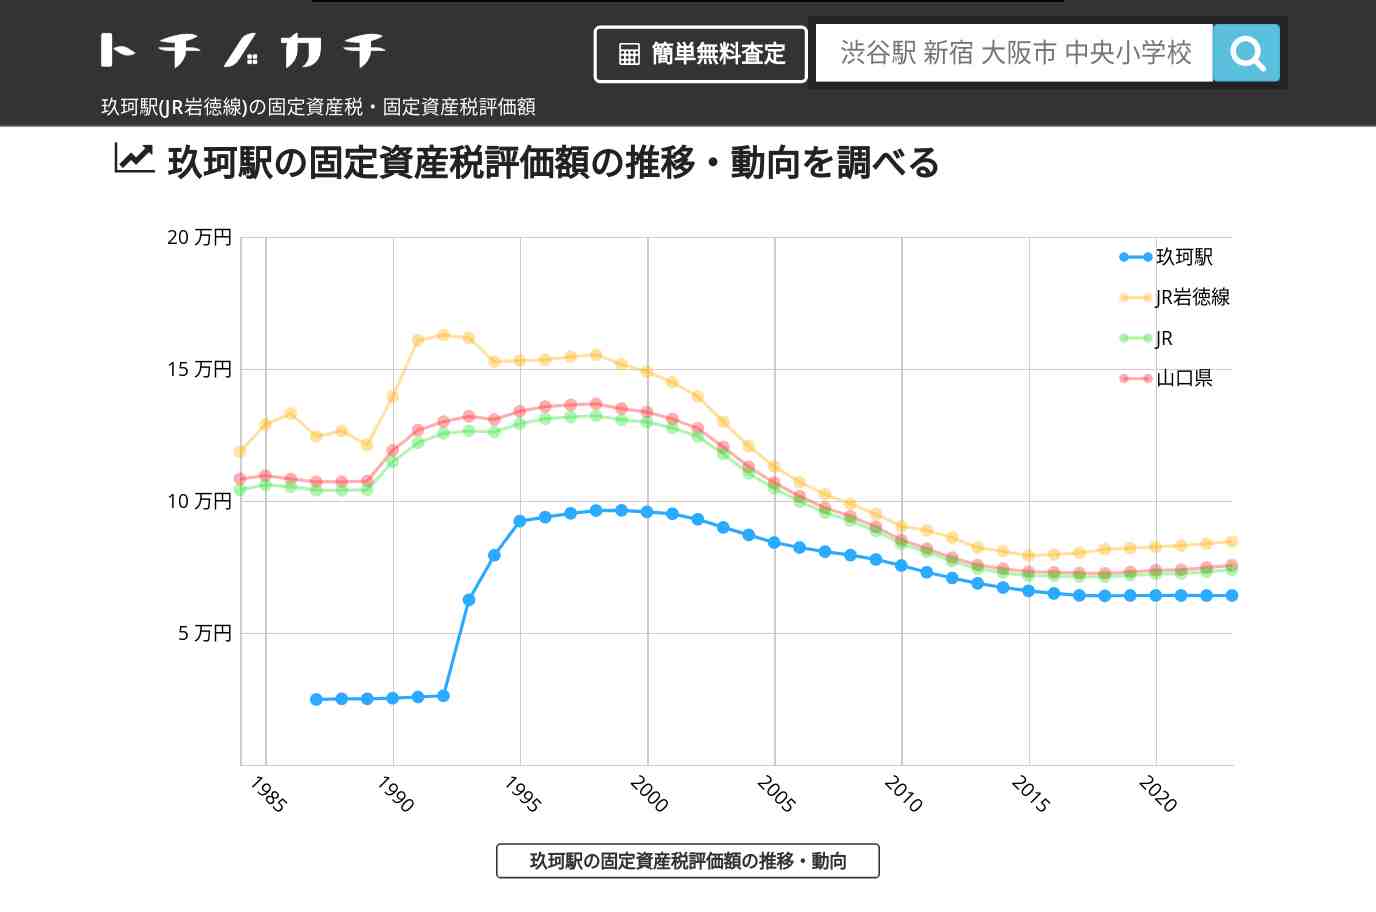 玖珂駅(JR岩徳線)の固定資産税・固定資産税評価額 | トチノカチ